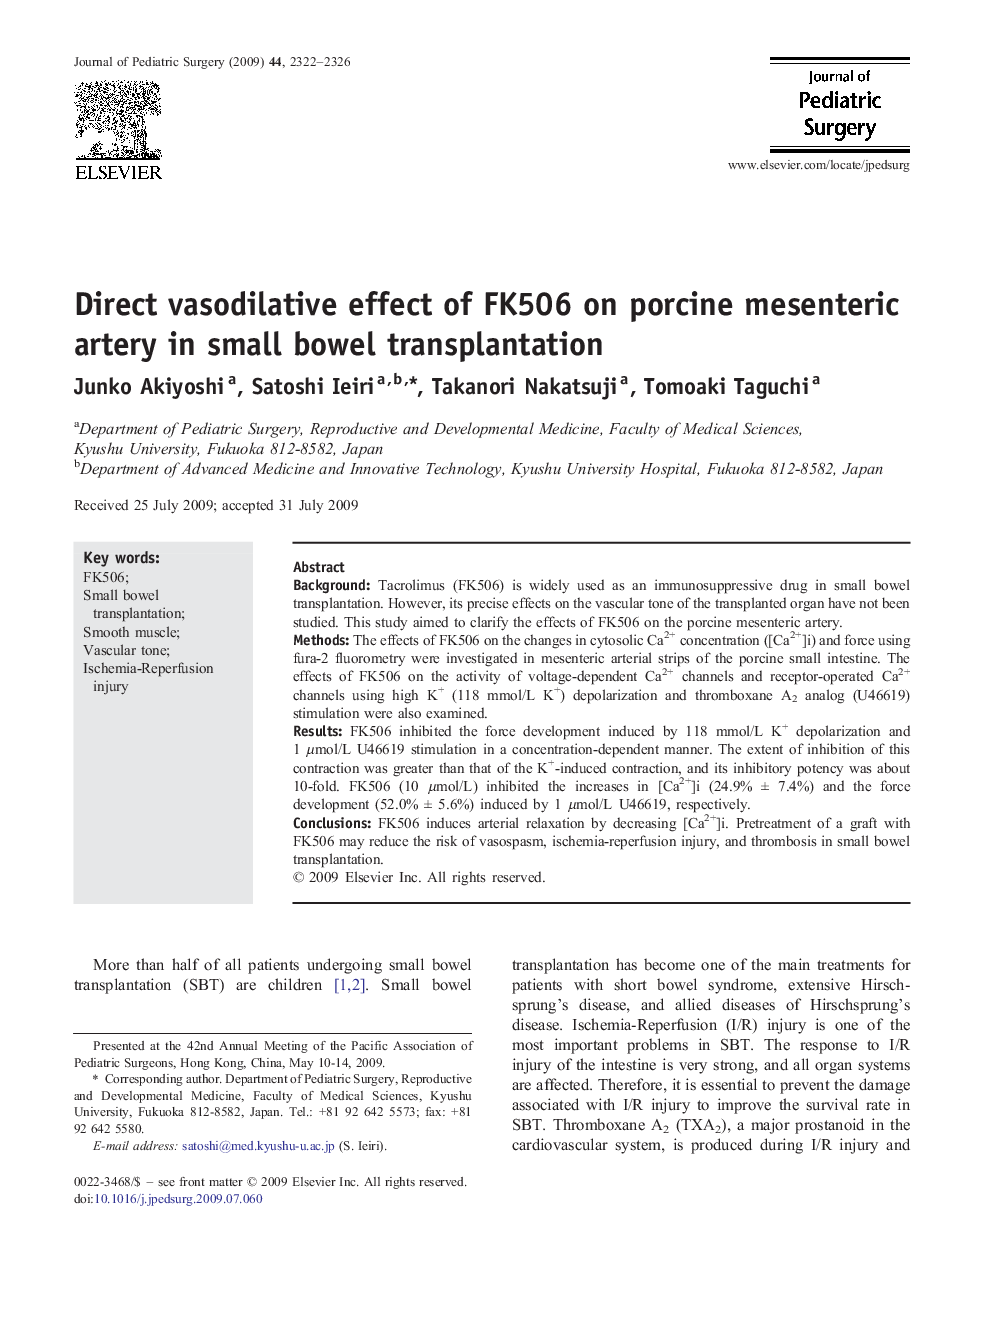 Direct vasodilative effect of FK506 on porcine mesenteric artery in small bowel transplantation